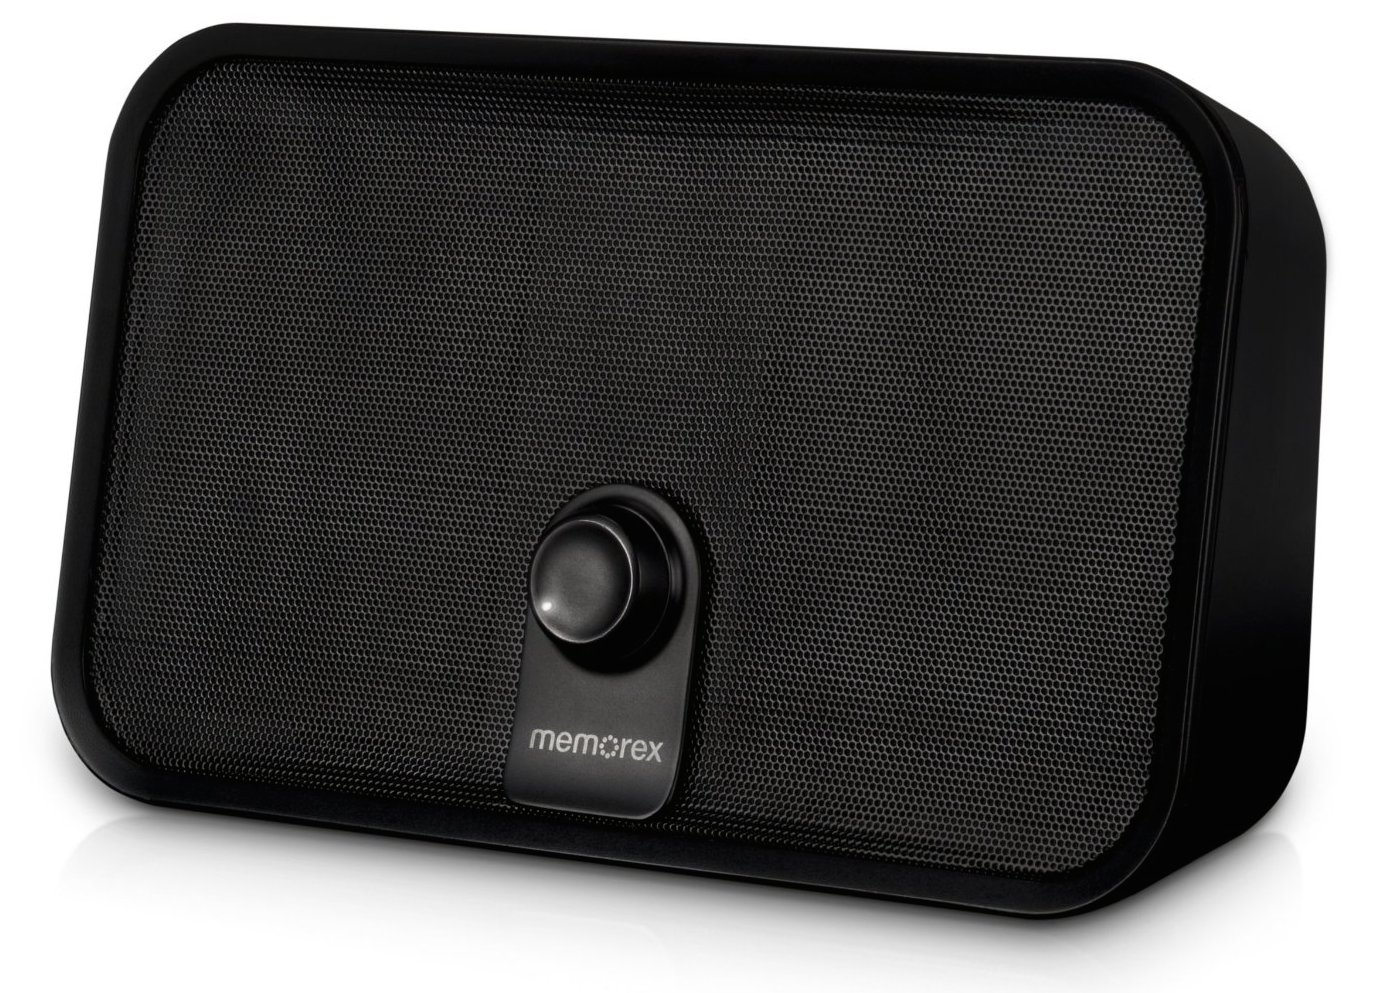 Memorex-speaker-phone